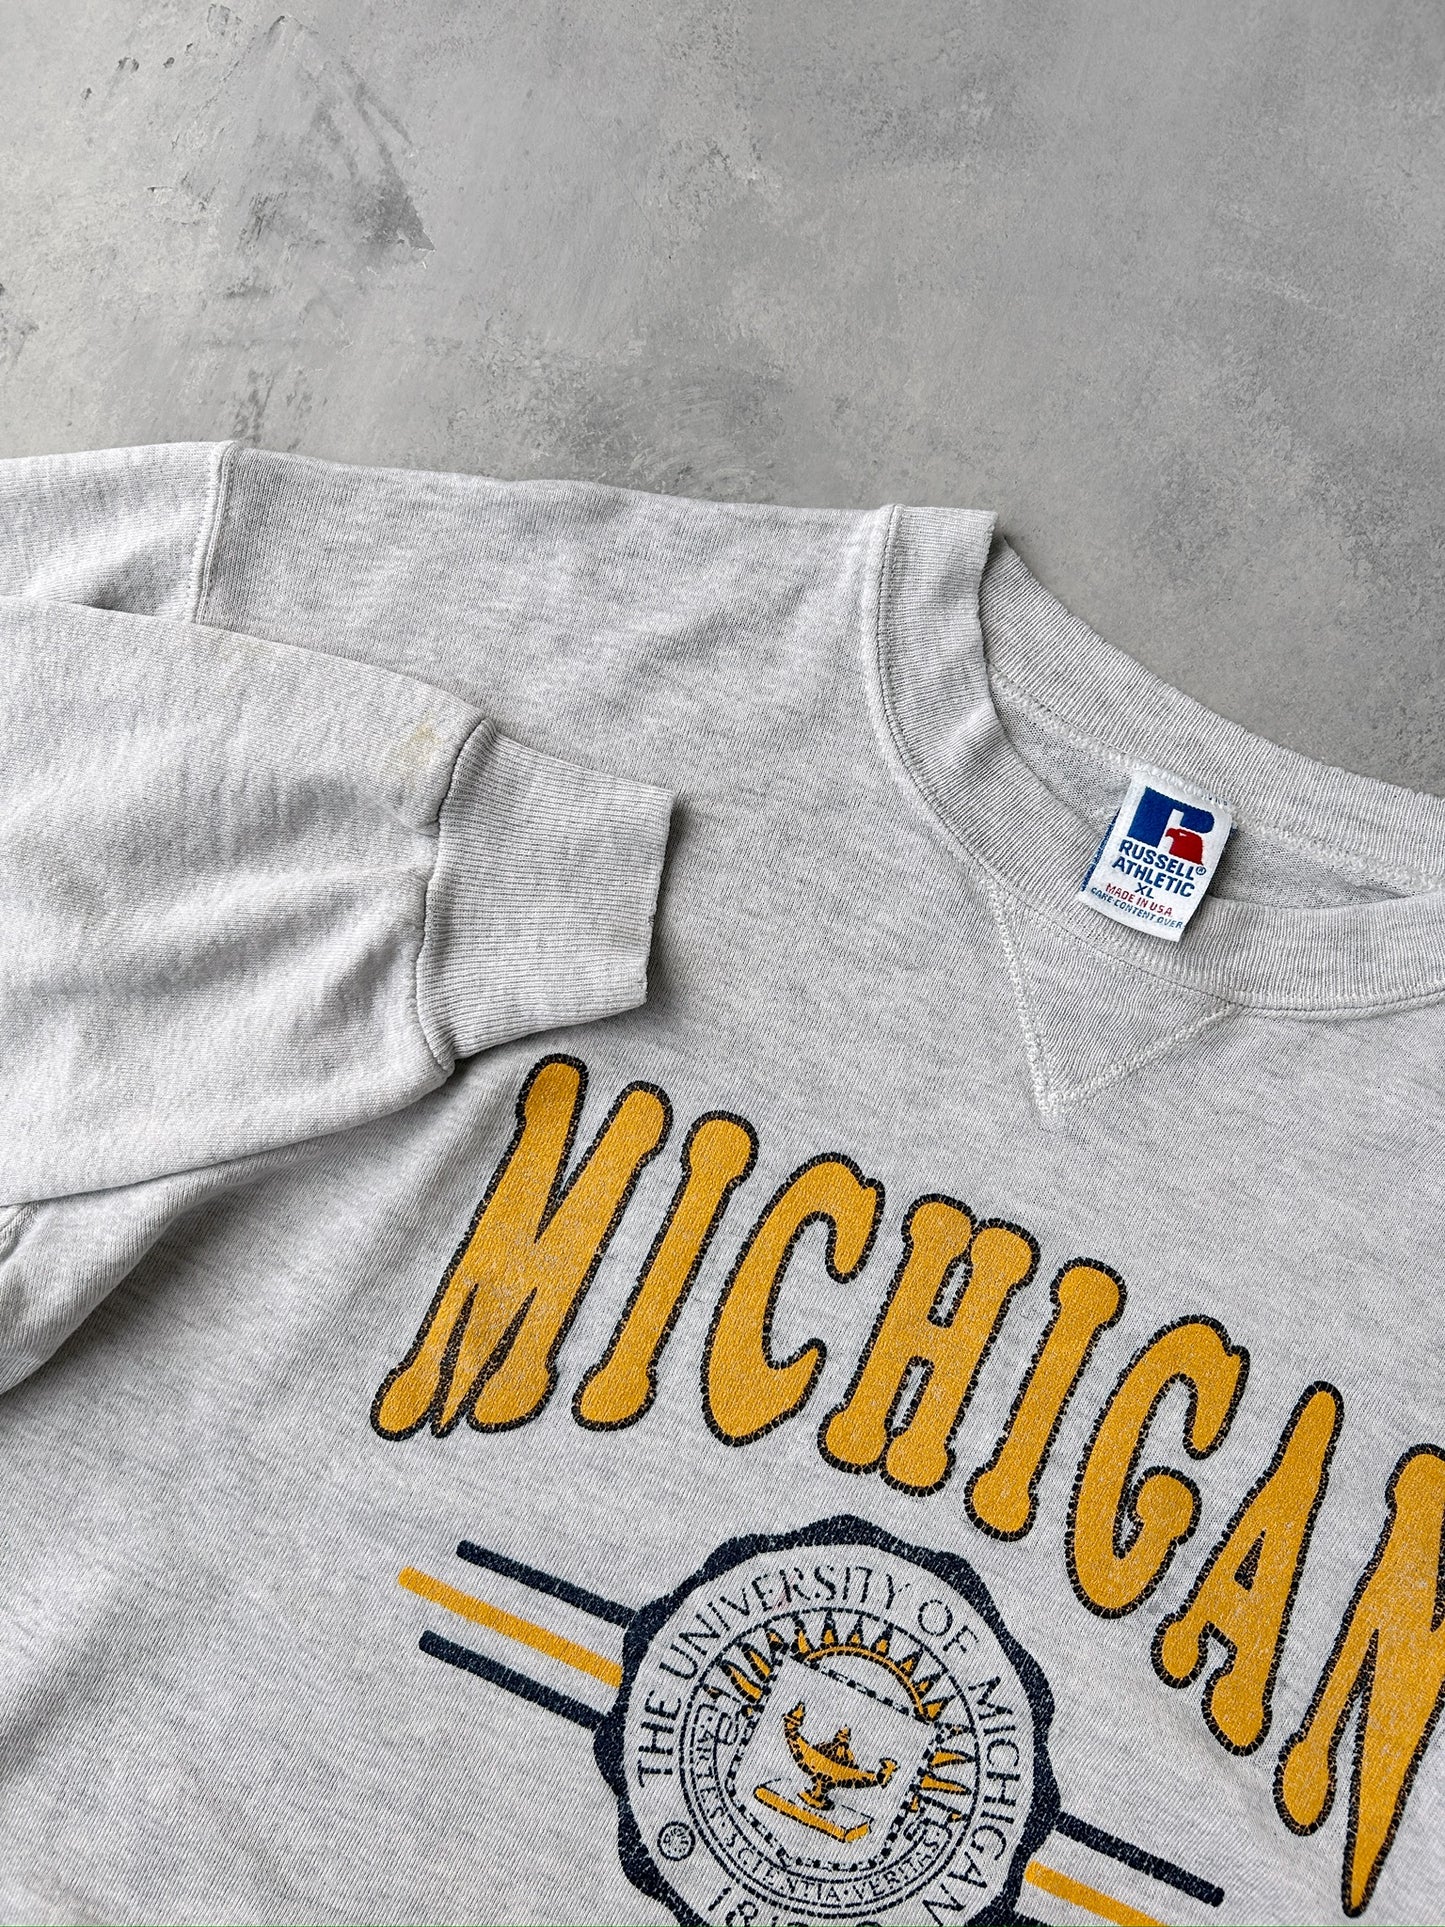 University of Michigan Sweatshirt 90's - Large